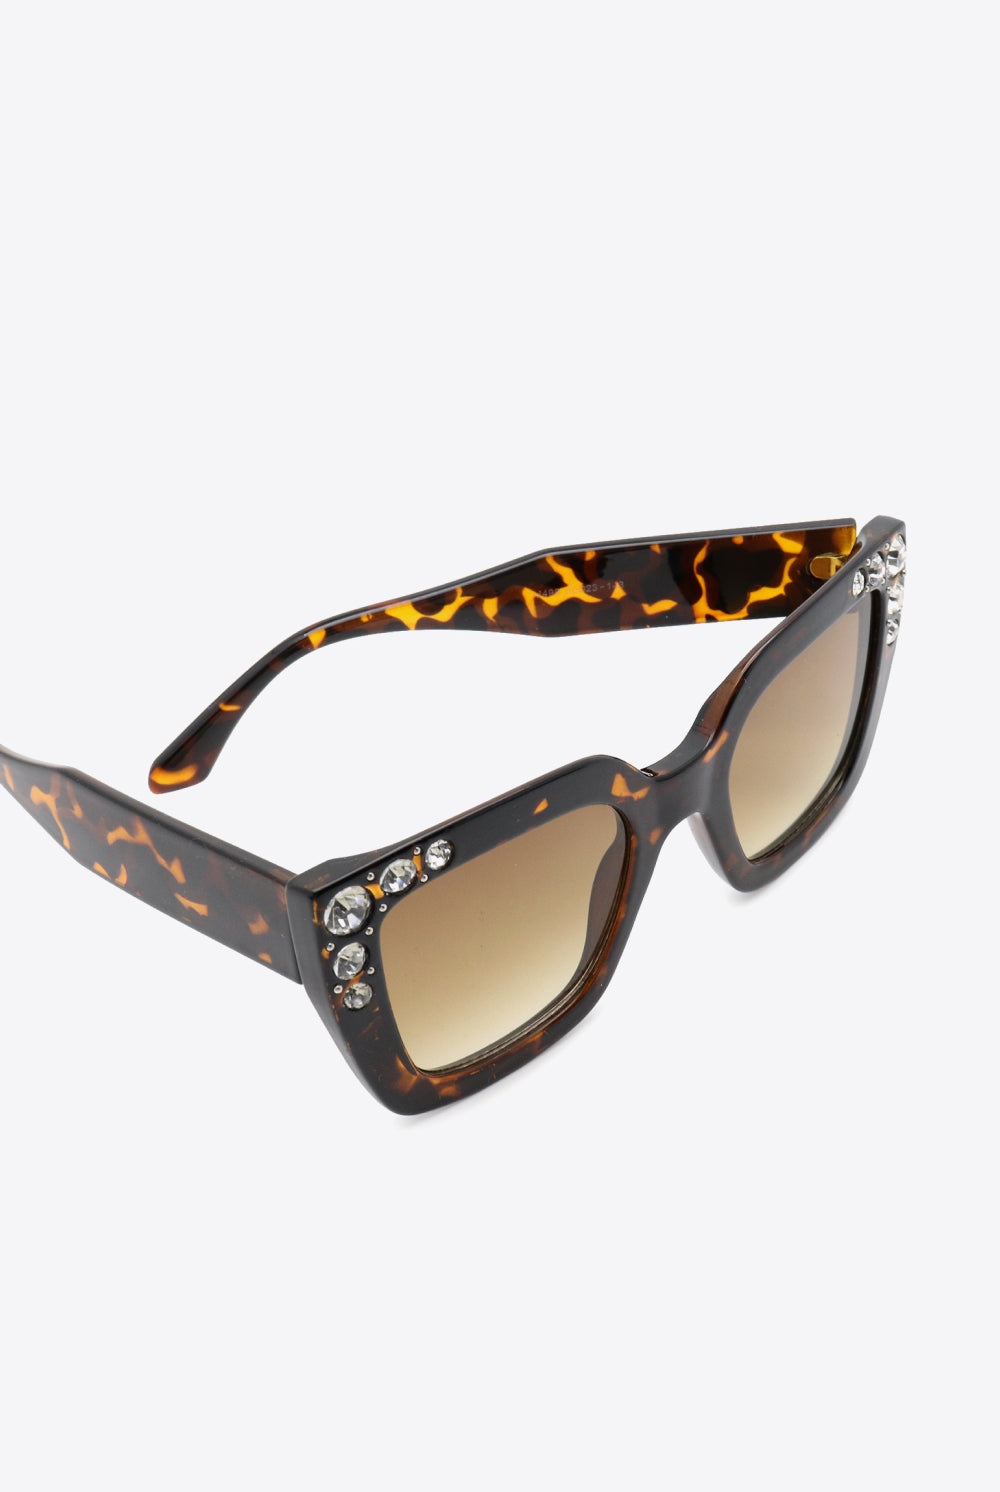 White Smoke Inlaid Rhinestone Polycarbonate Sunglasses Sunglasses